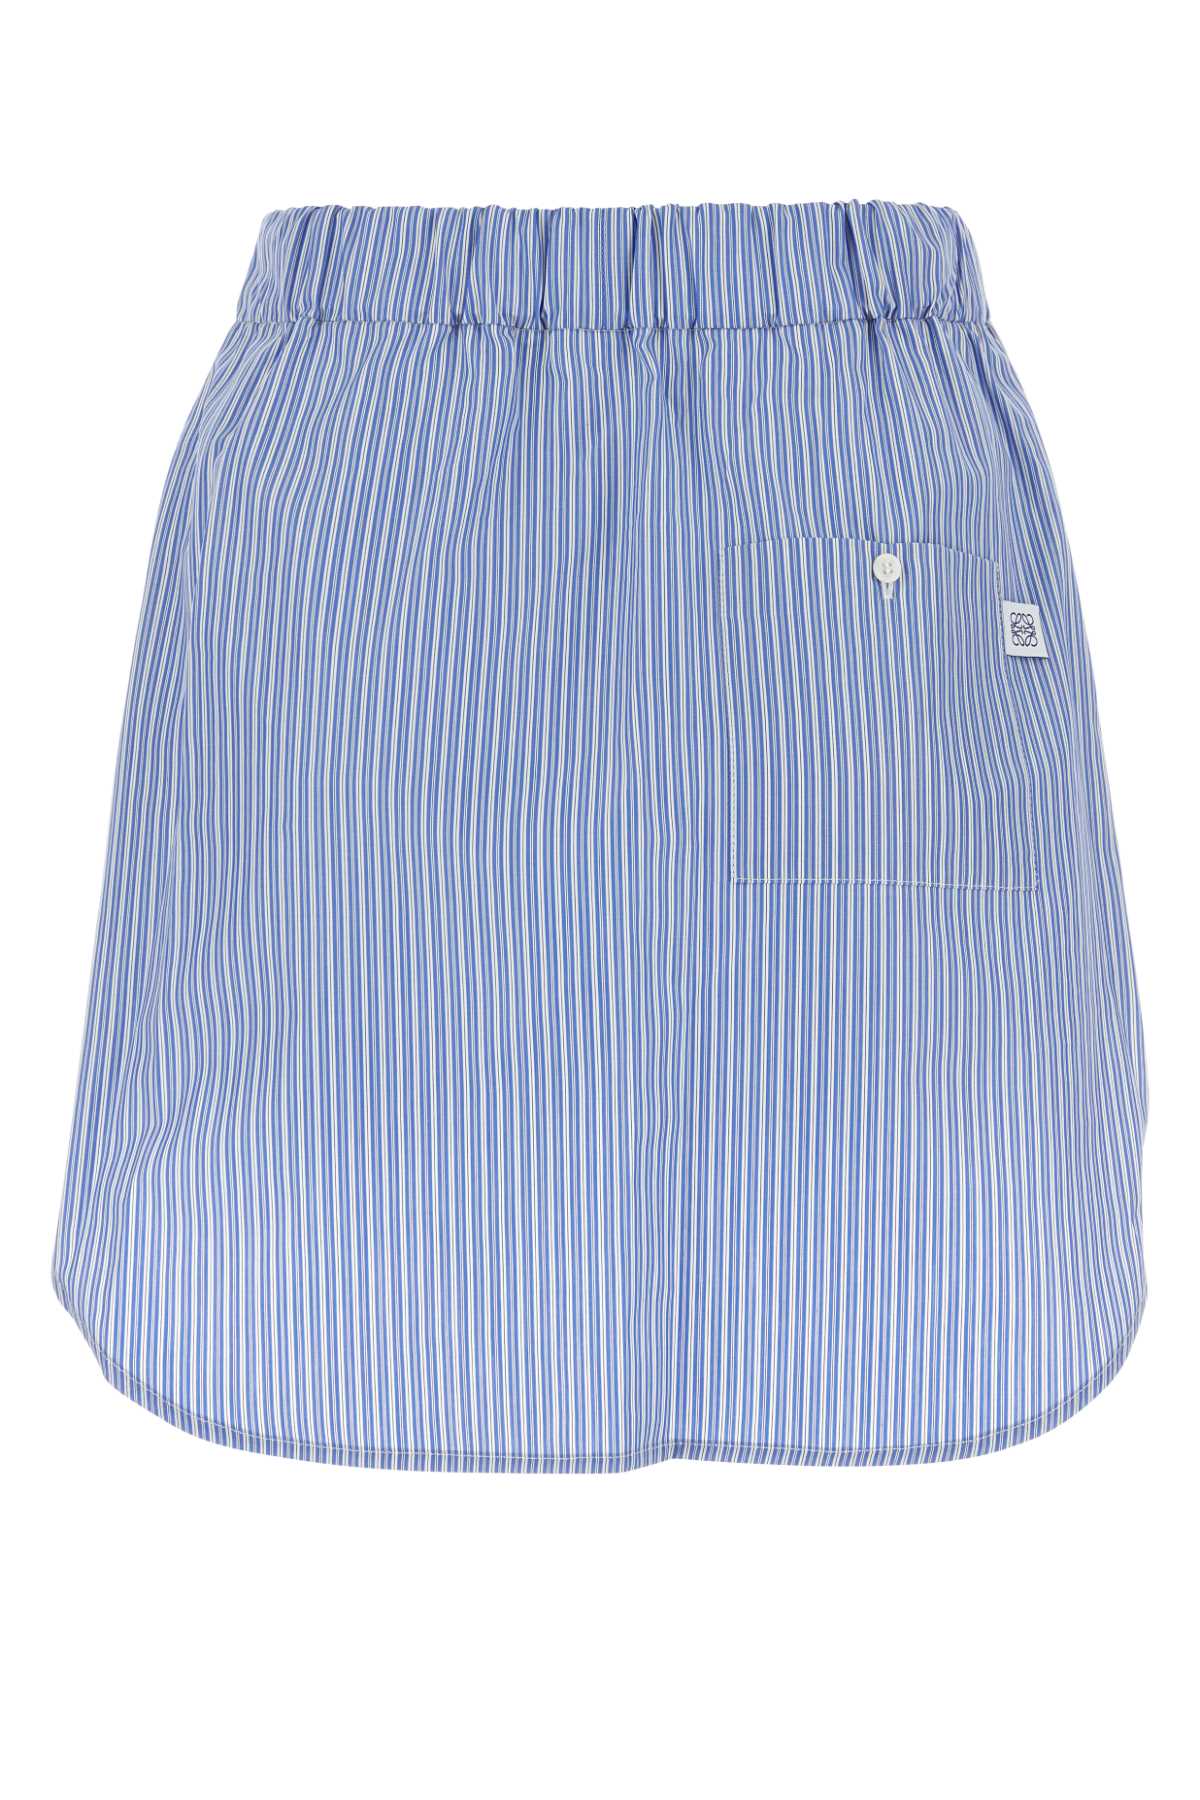 Loewe Printed Cotton Mini Skirt In Bluewhite